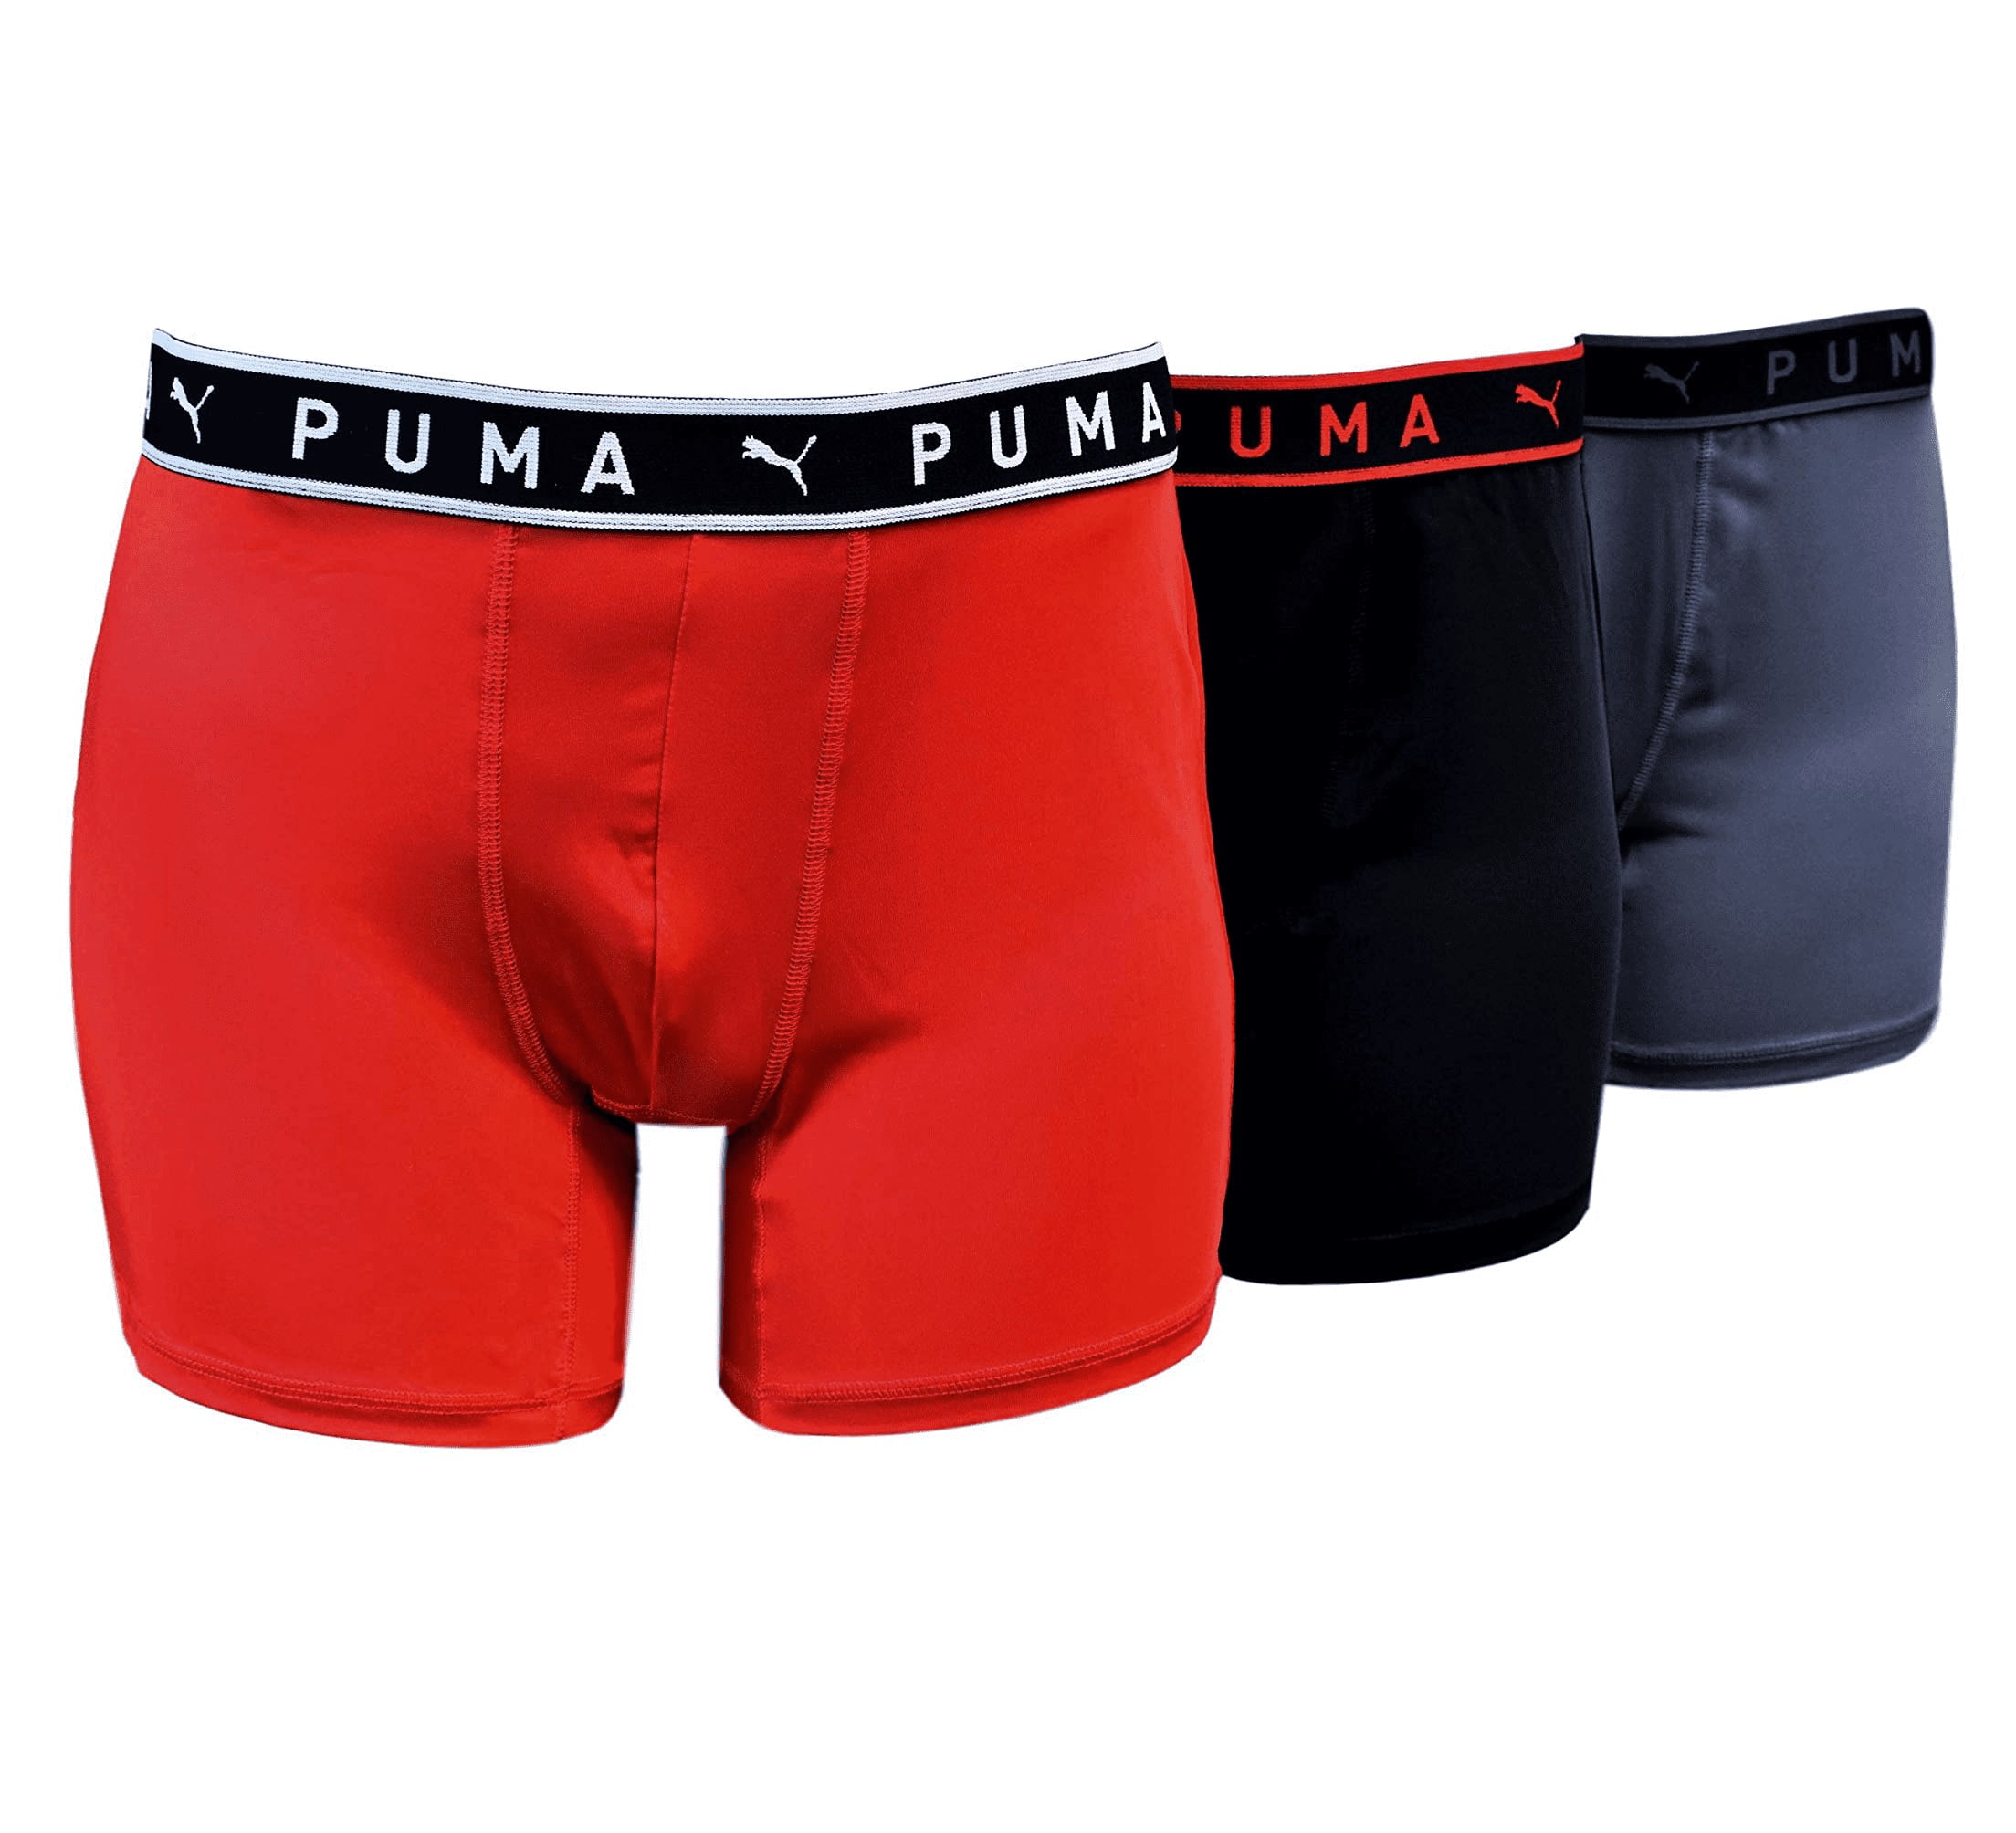 PUMA - PUMA MEN'S BIG & TALL - 5002 RED BLACK 4XL - PACK 3 BOXER BRIEF ...